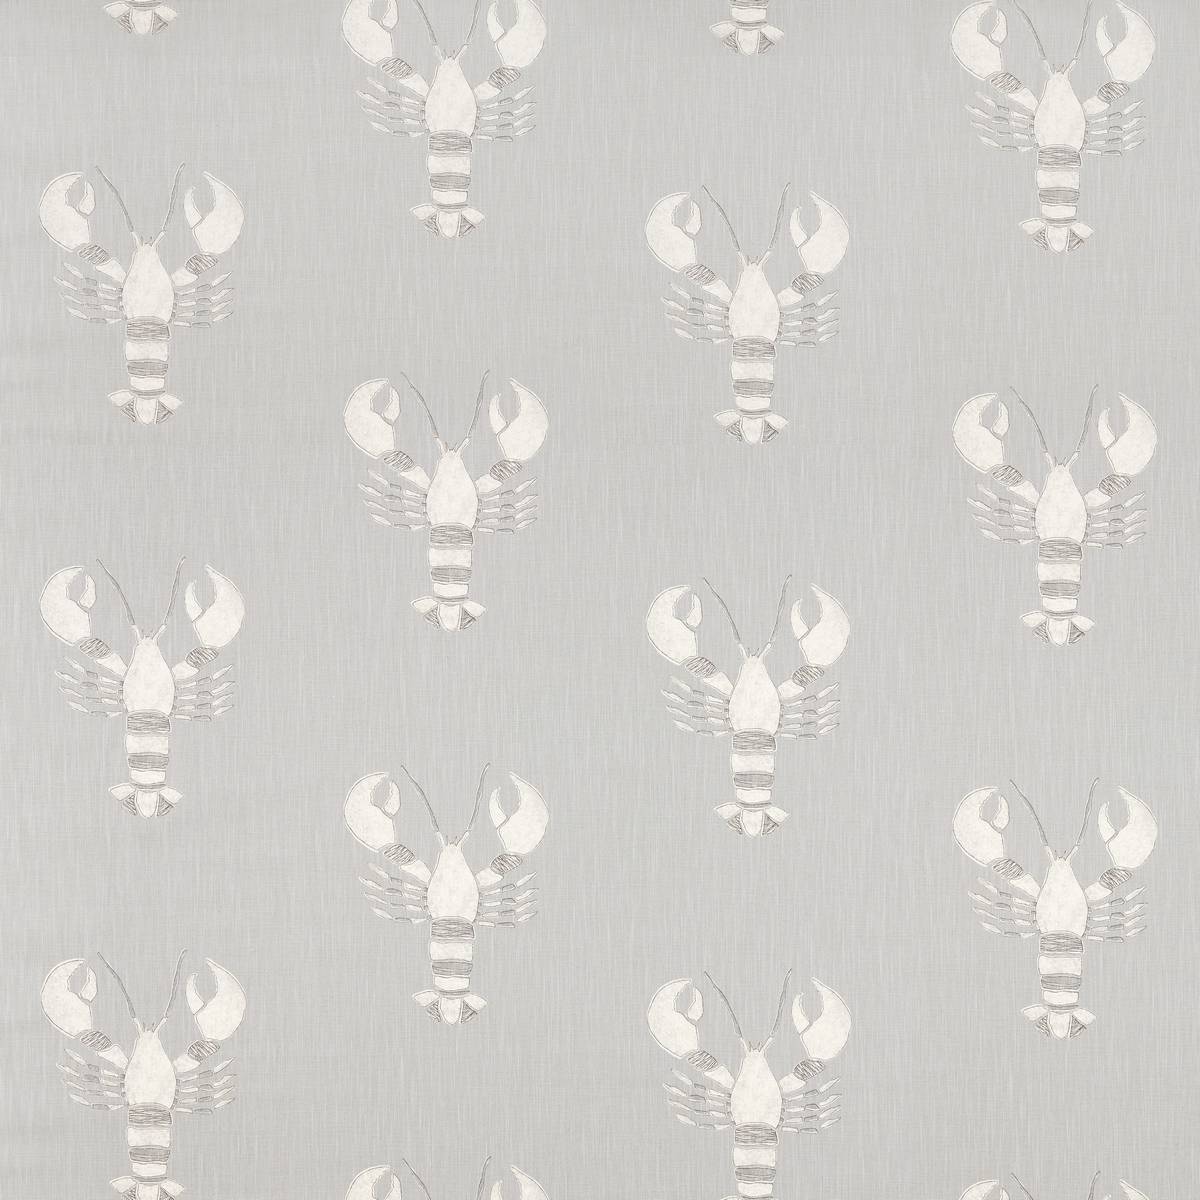 Cromer Gull Fabric by Sanderson